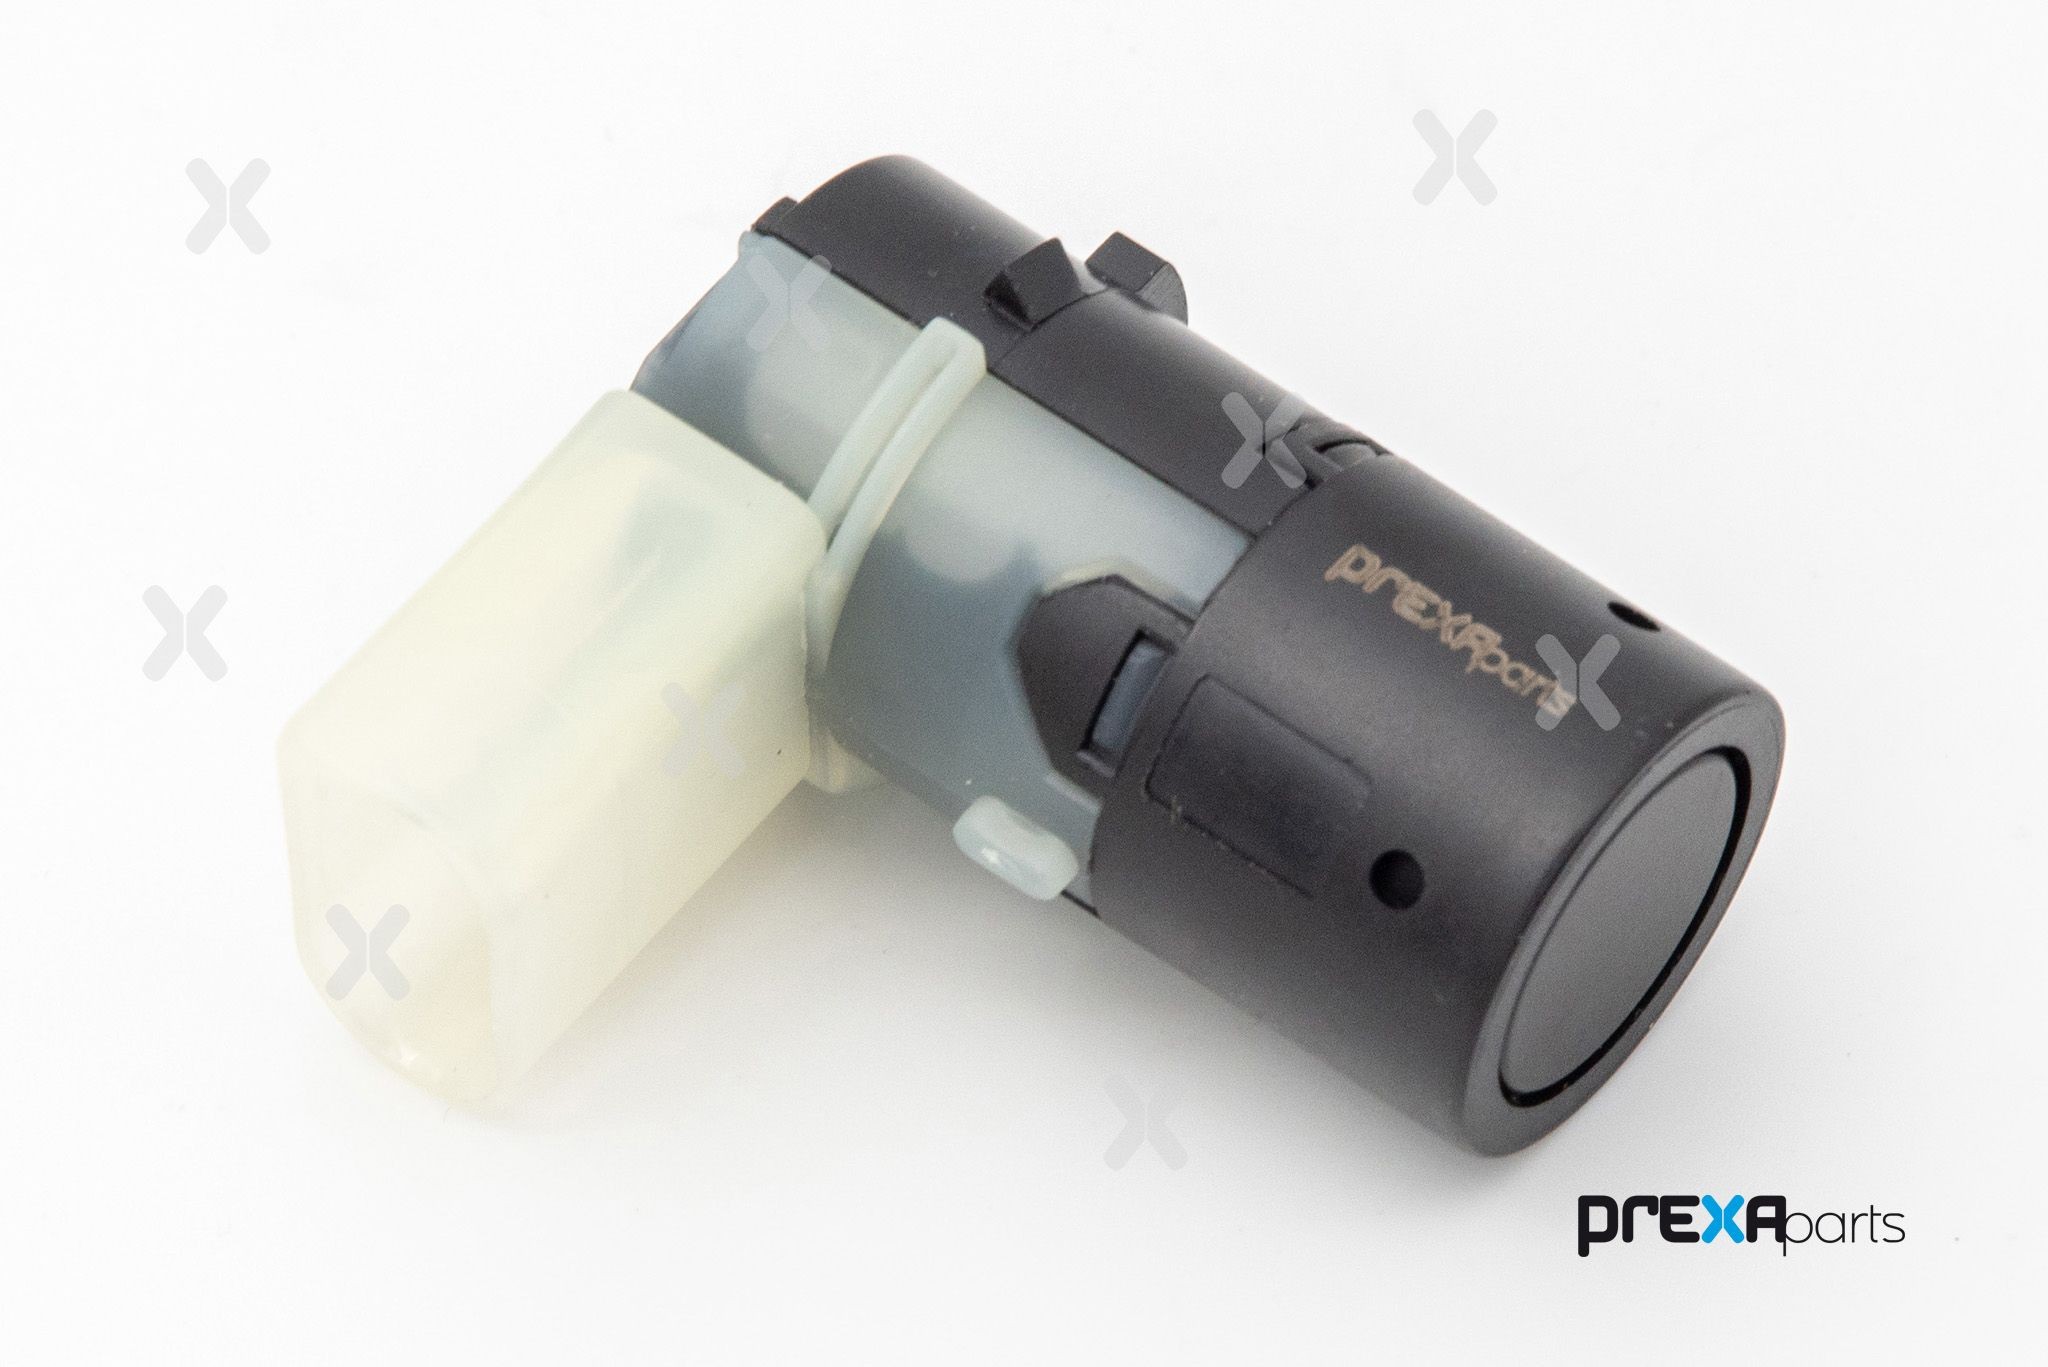 PREXAparts Ultrasonic Sensor Reversing sensors P103009 buy